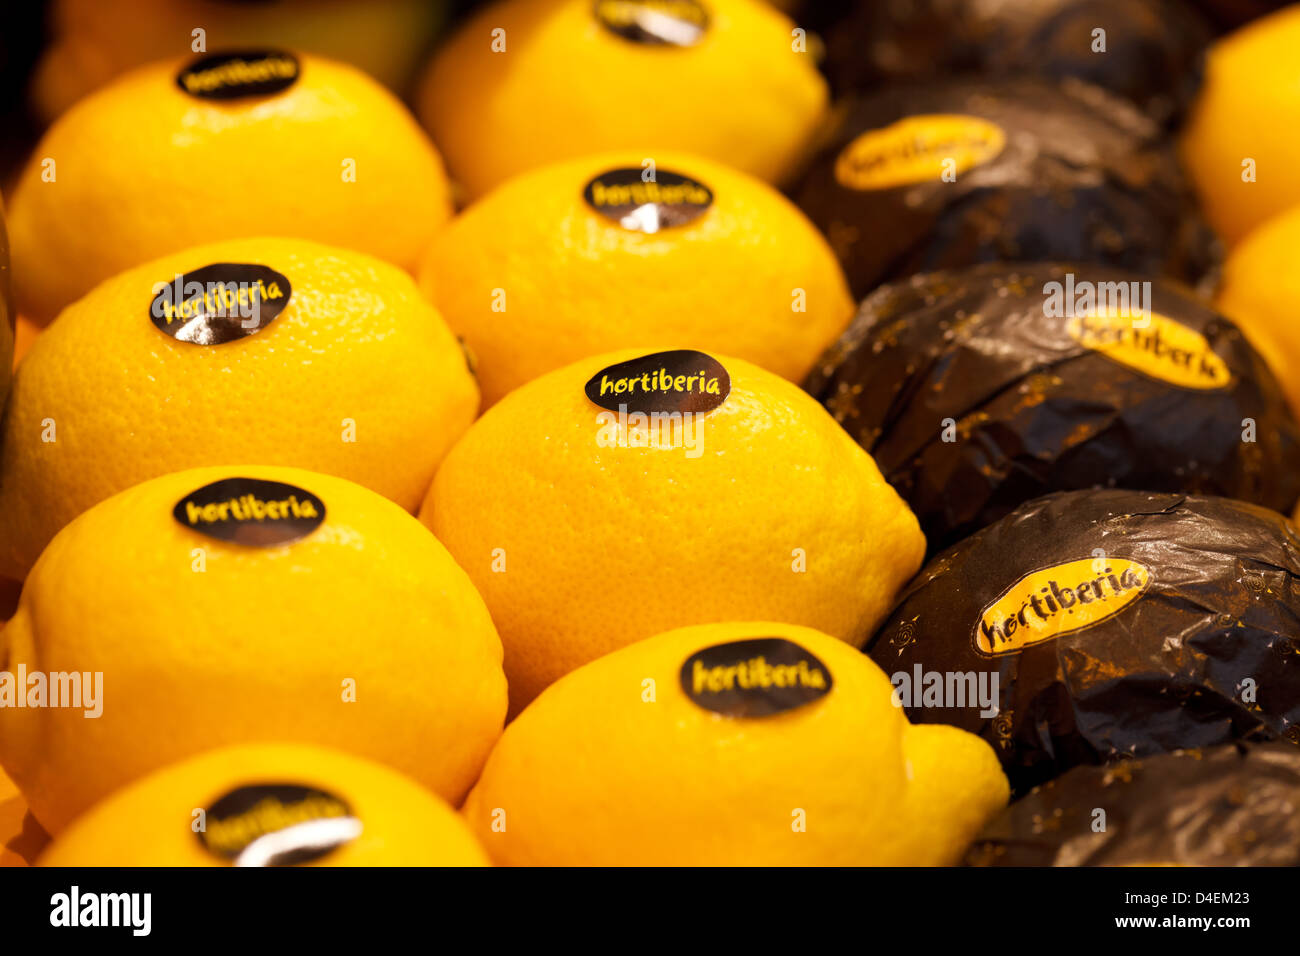 Berlin, Germany, from lemons Hortiberia at Fruit Logistica 2011 Stock Photo